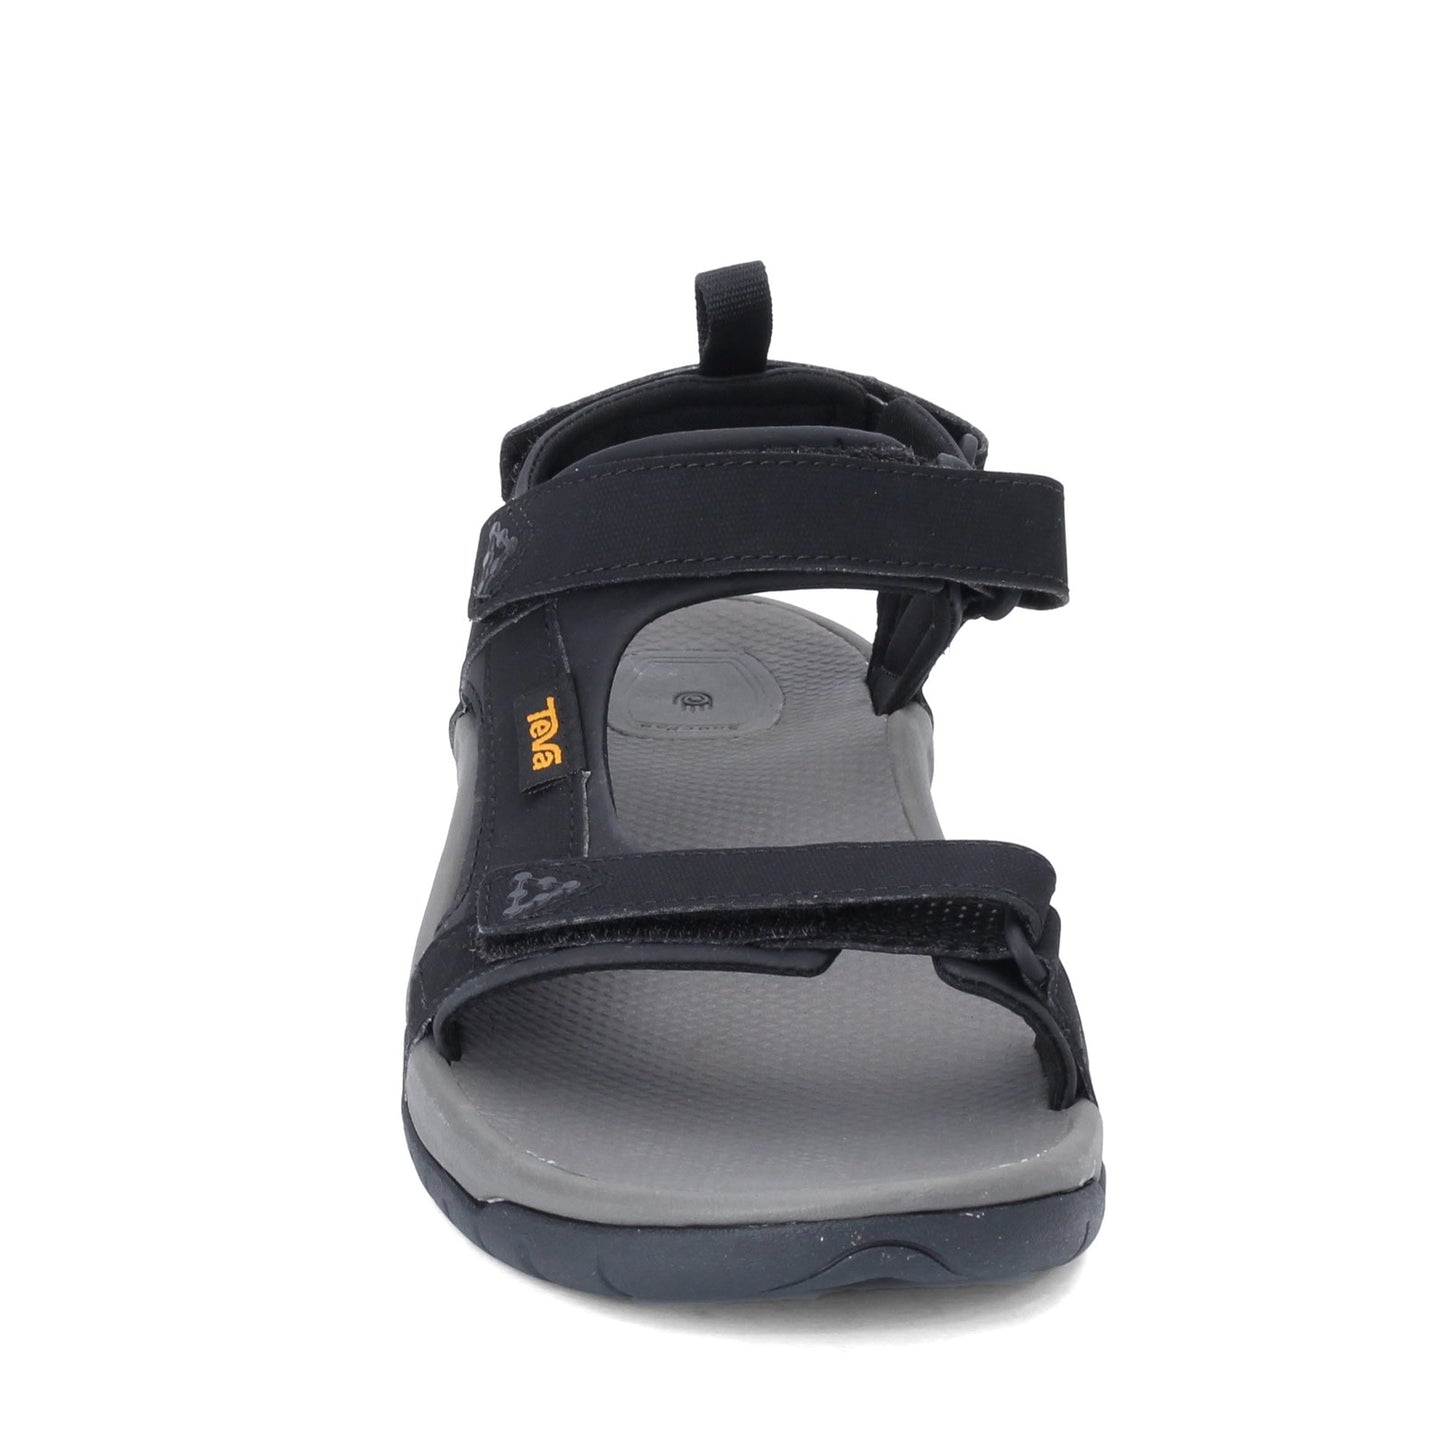 Peltz Shoes  Men's Teva Meacham Sandal BLACK 1110392-BLK